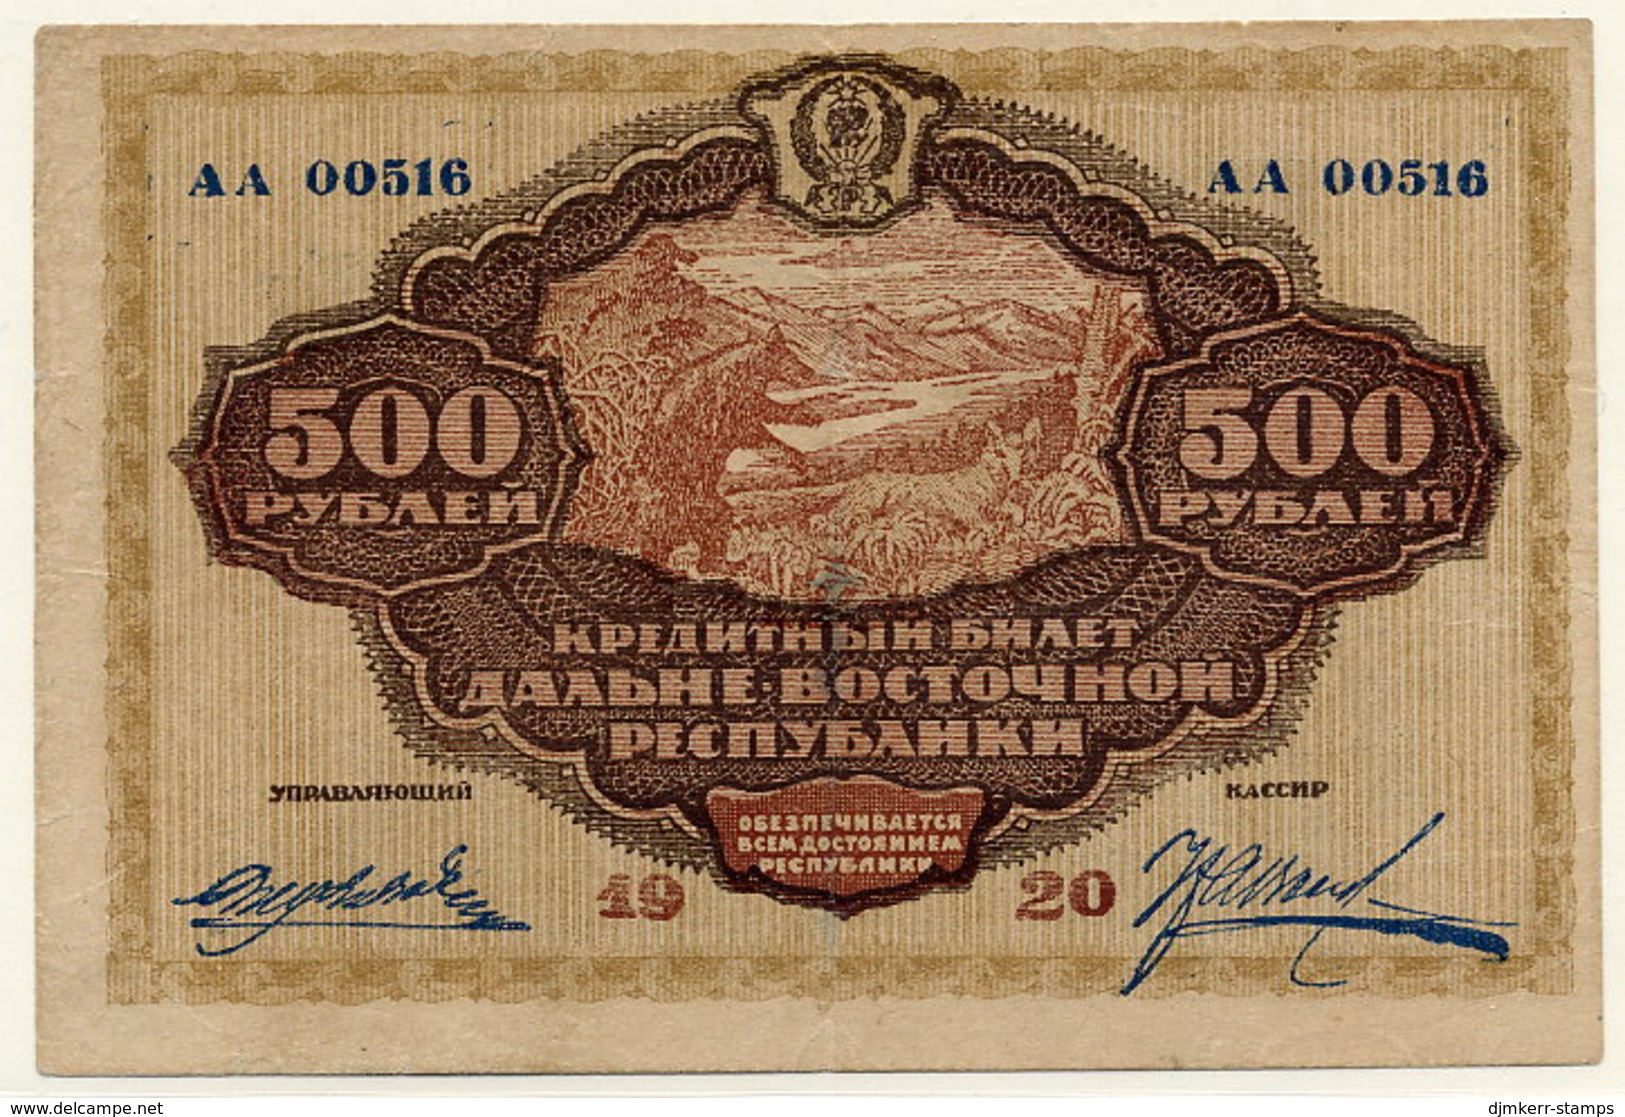 EAST SIBERIA (Far Eastern Republic) 1920 500 Rub.  VF S1207 - Russia